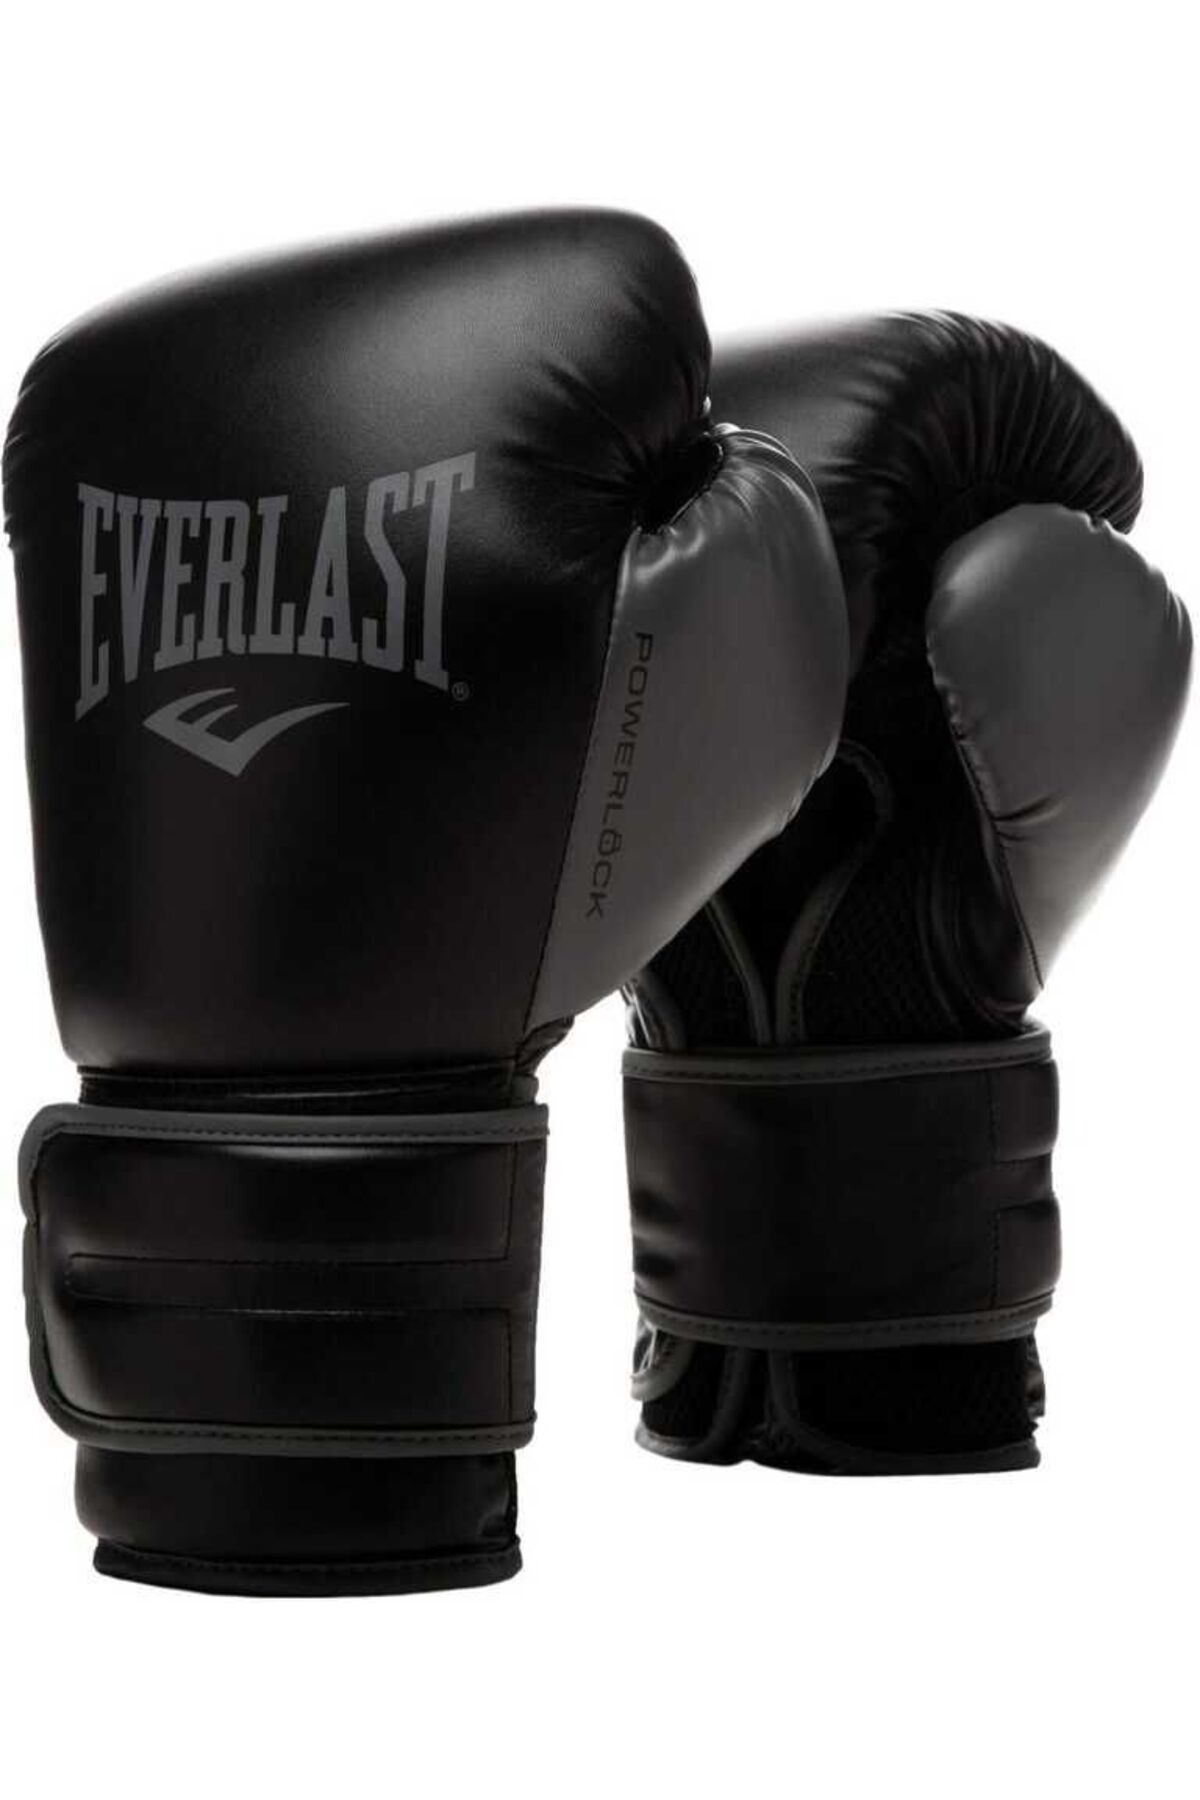 Everlast Powerlock 2r Training Gloves 10oz Boks Eldiveni 870310-70-8